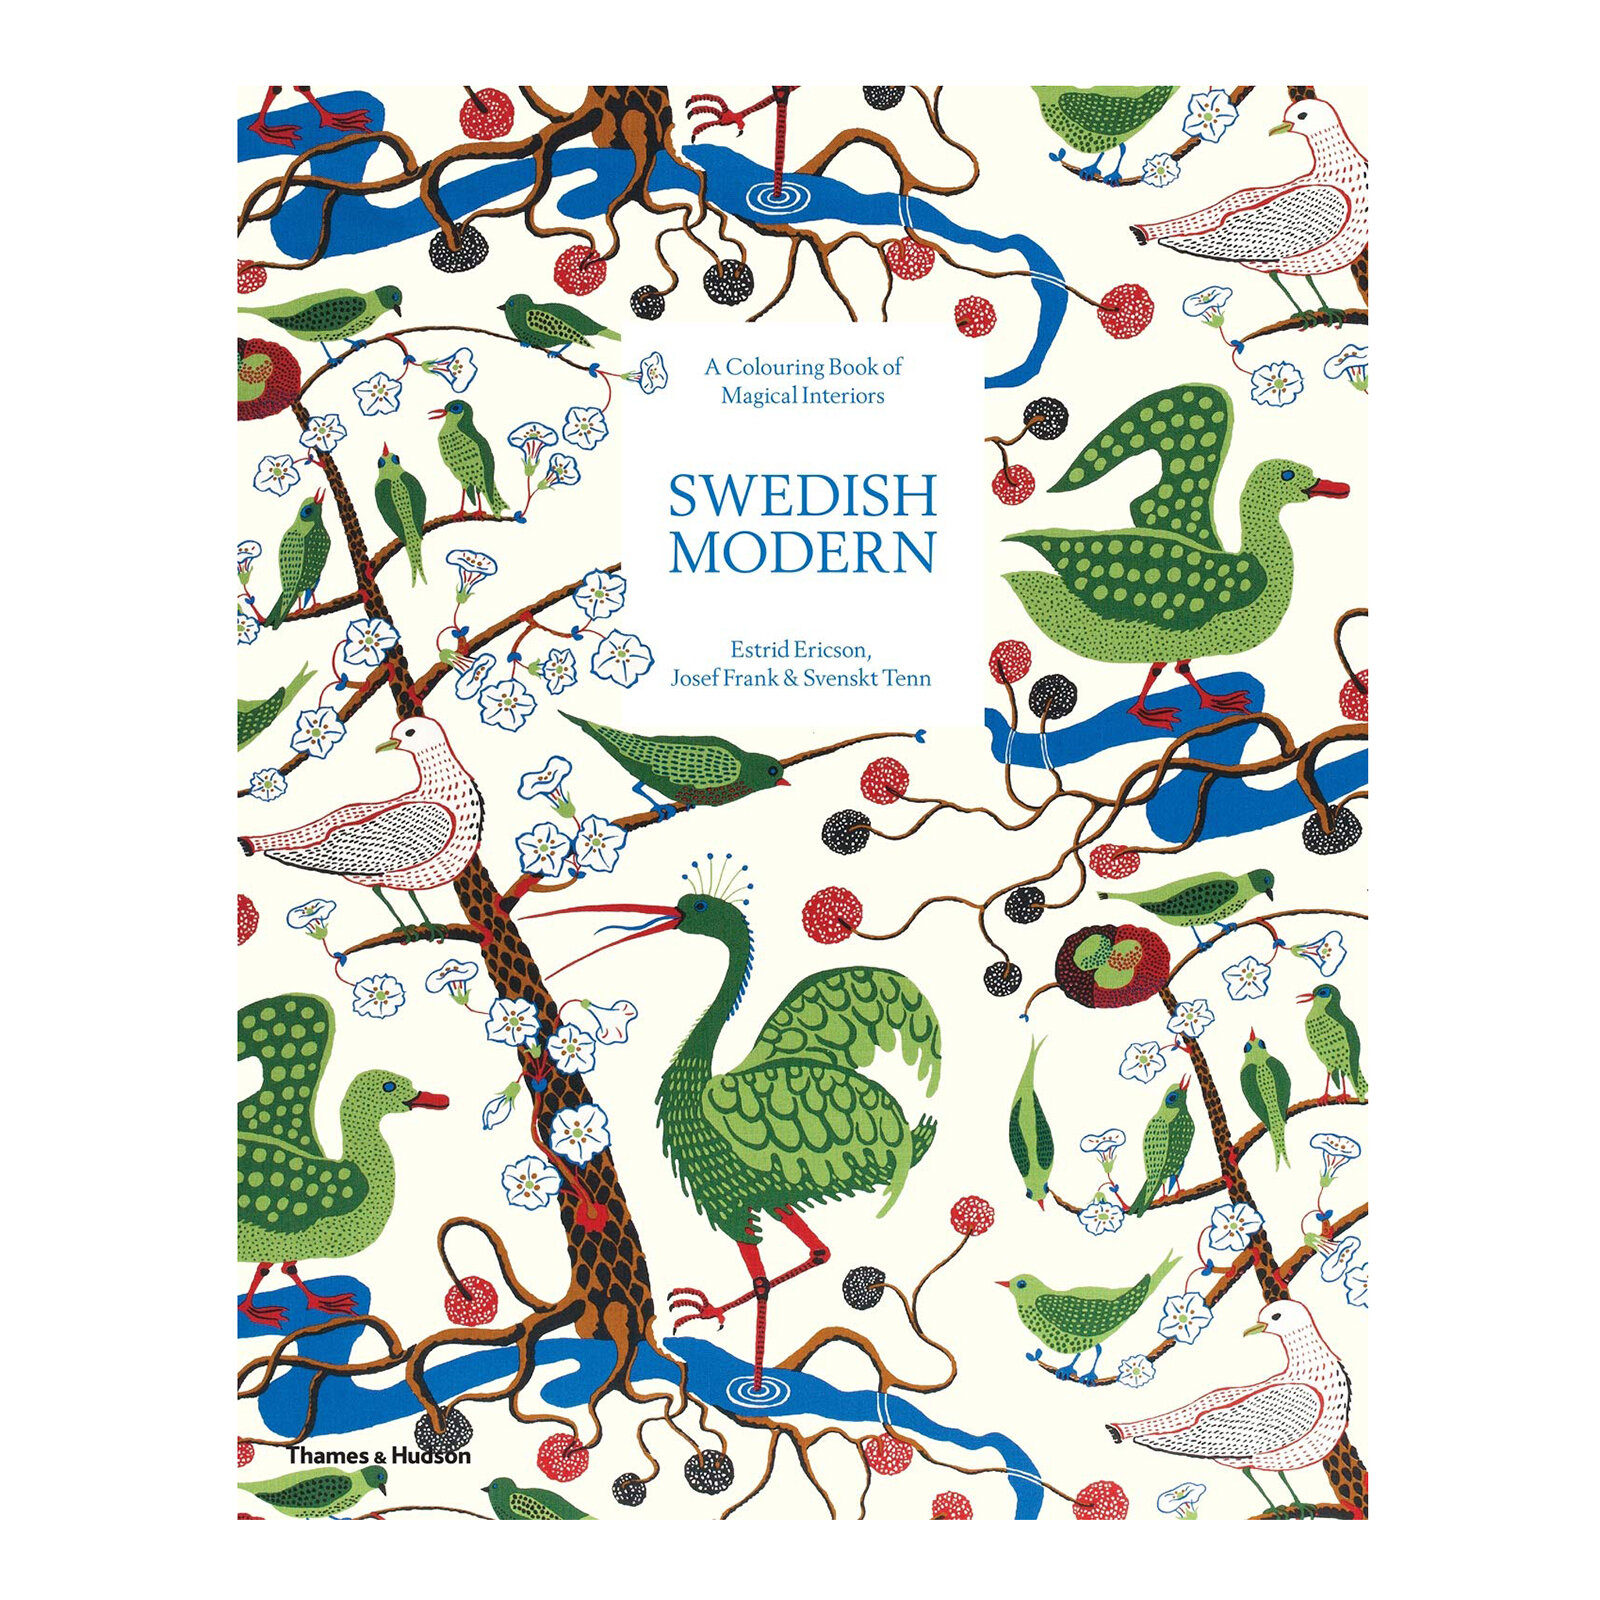 Swedish Modern: A Coloring Book of Magical Interiors, Estrid Ericson, Josef Frank, and Svenskt Tenn, $18.13 